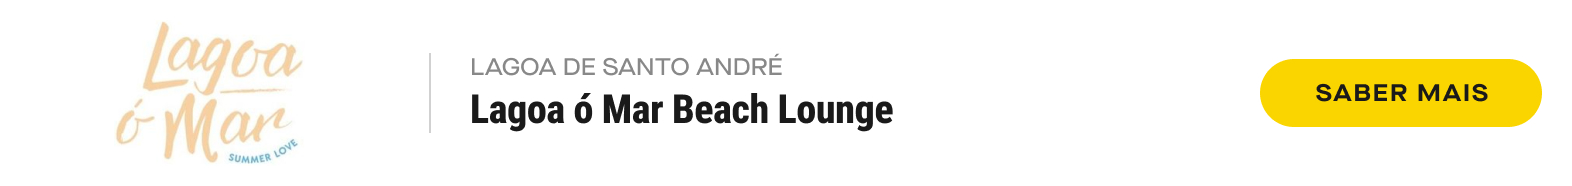 84.Desktop Lagoa O Mar Beach Lounge Lagoa De Santo Andre